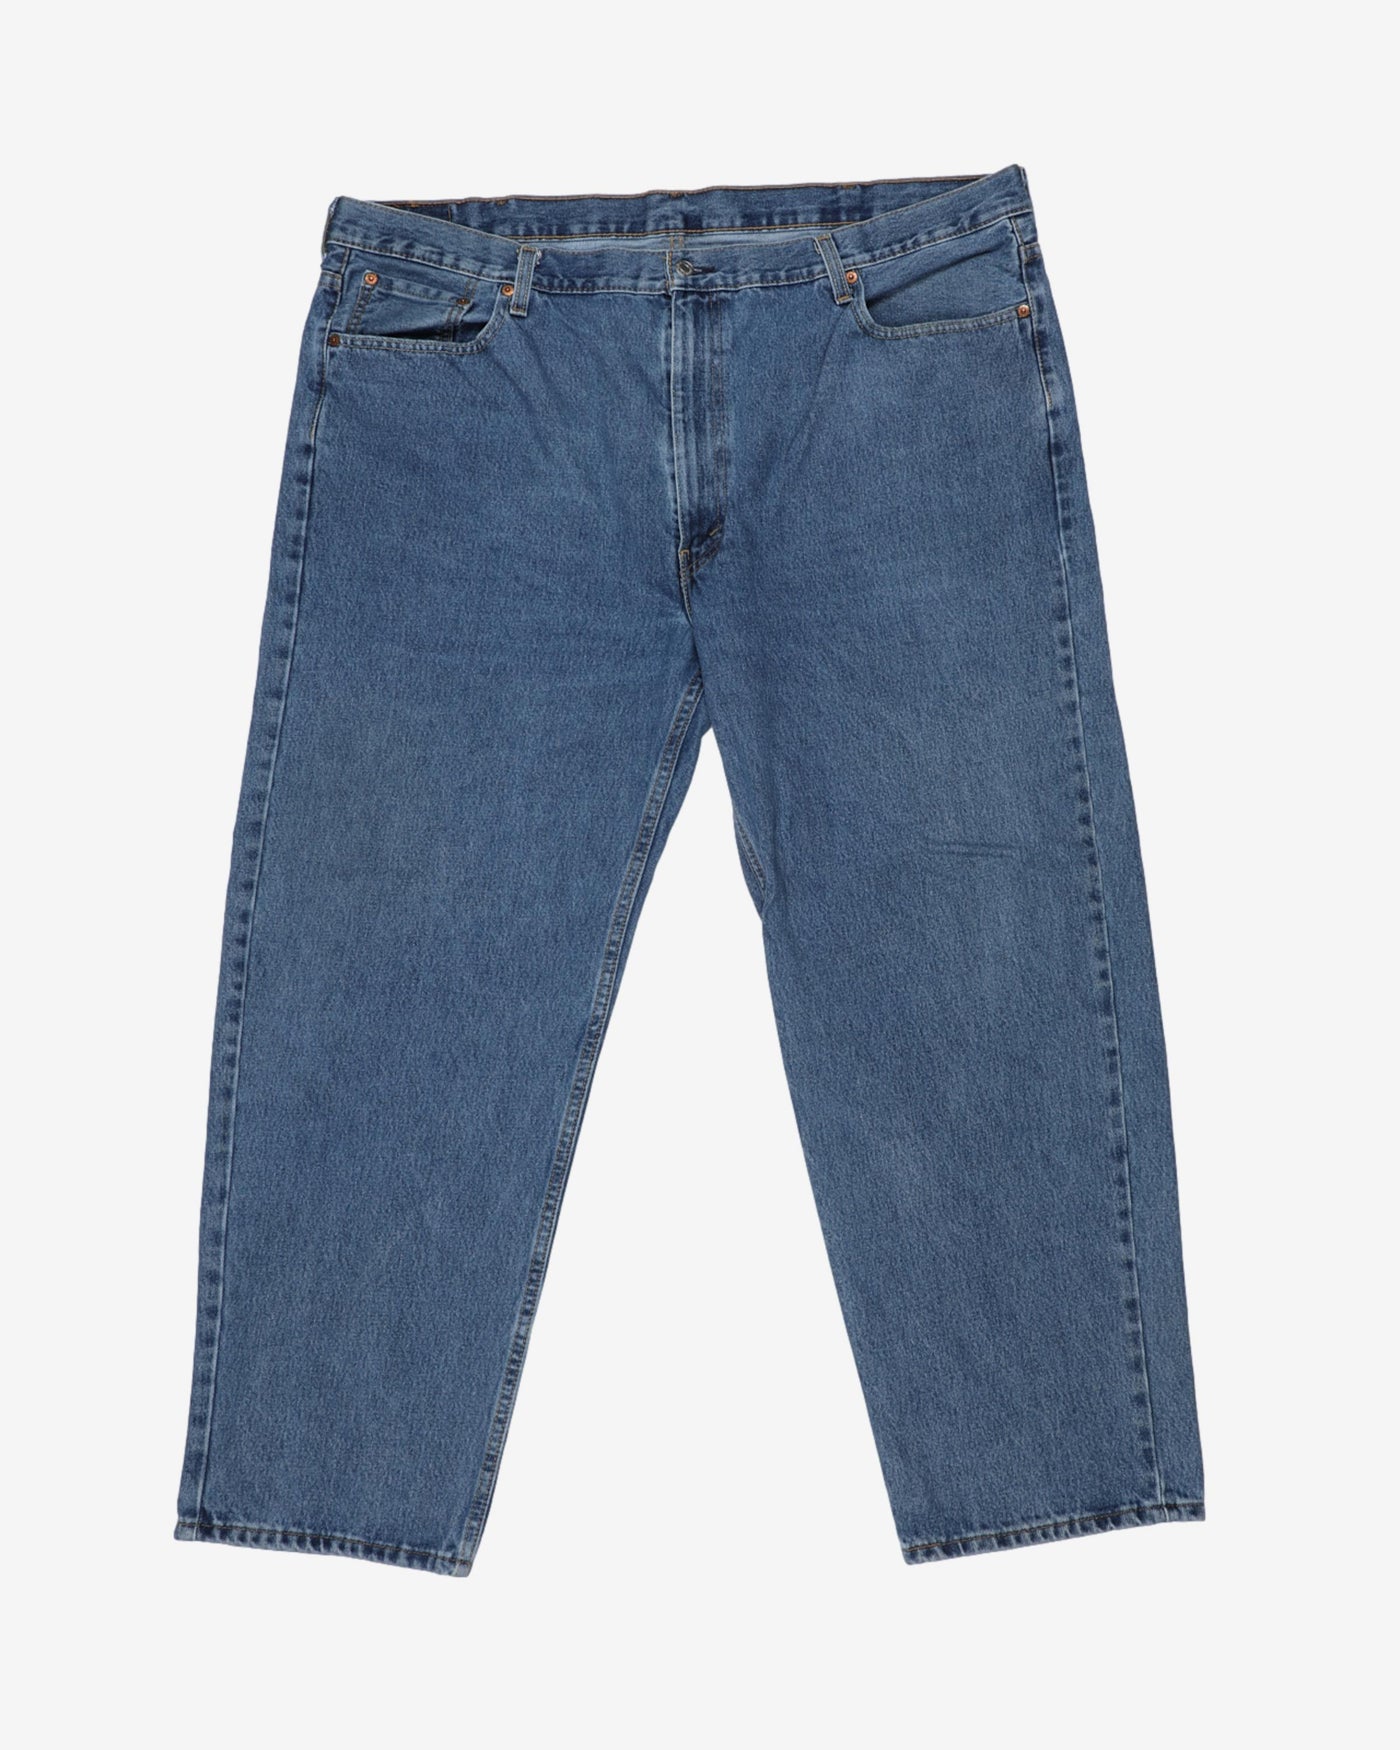 Levi's 550 Washed Blue Casual Denim Jeans - W47 L30